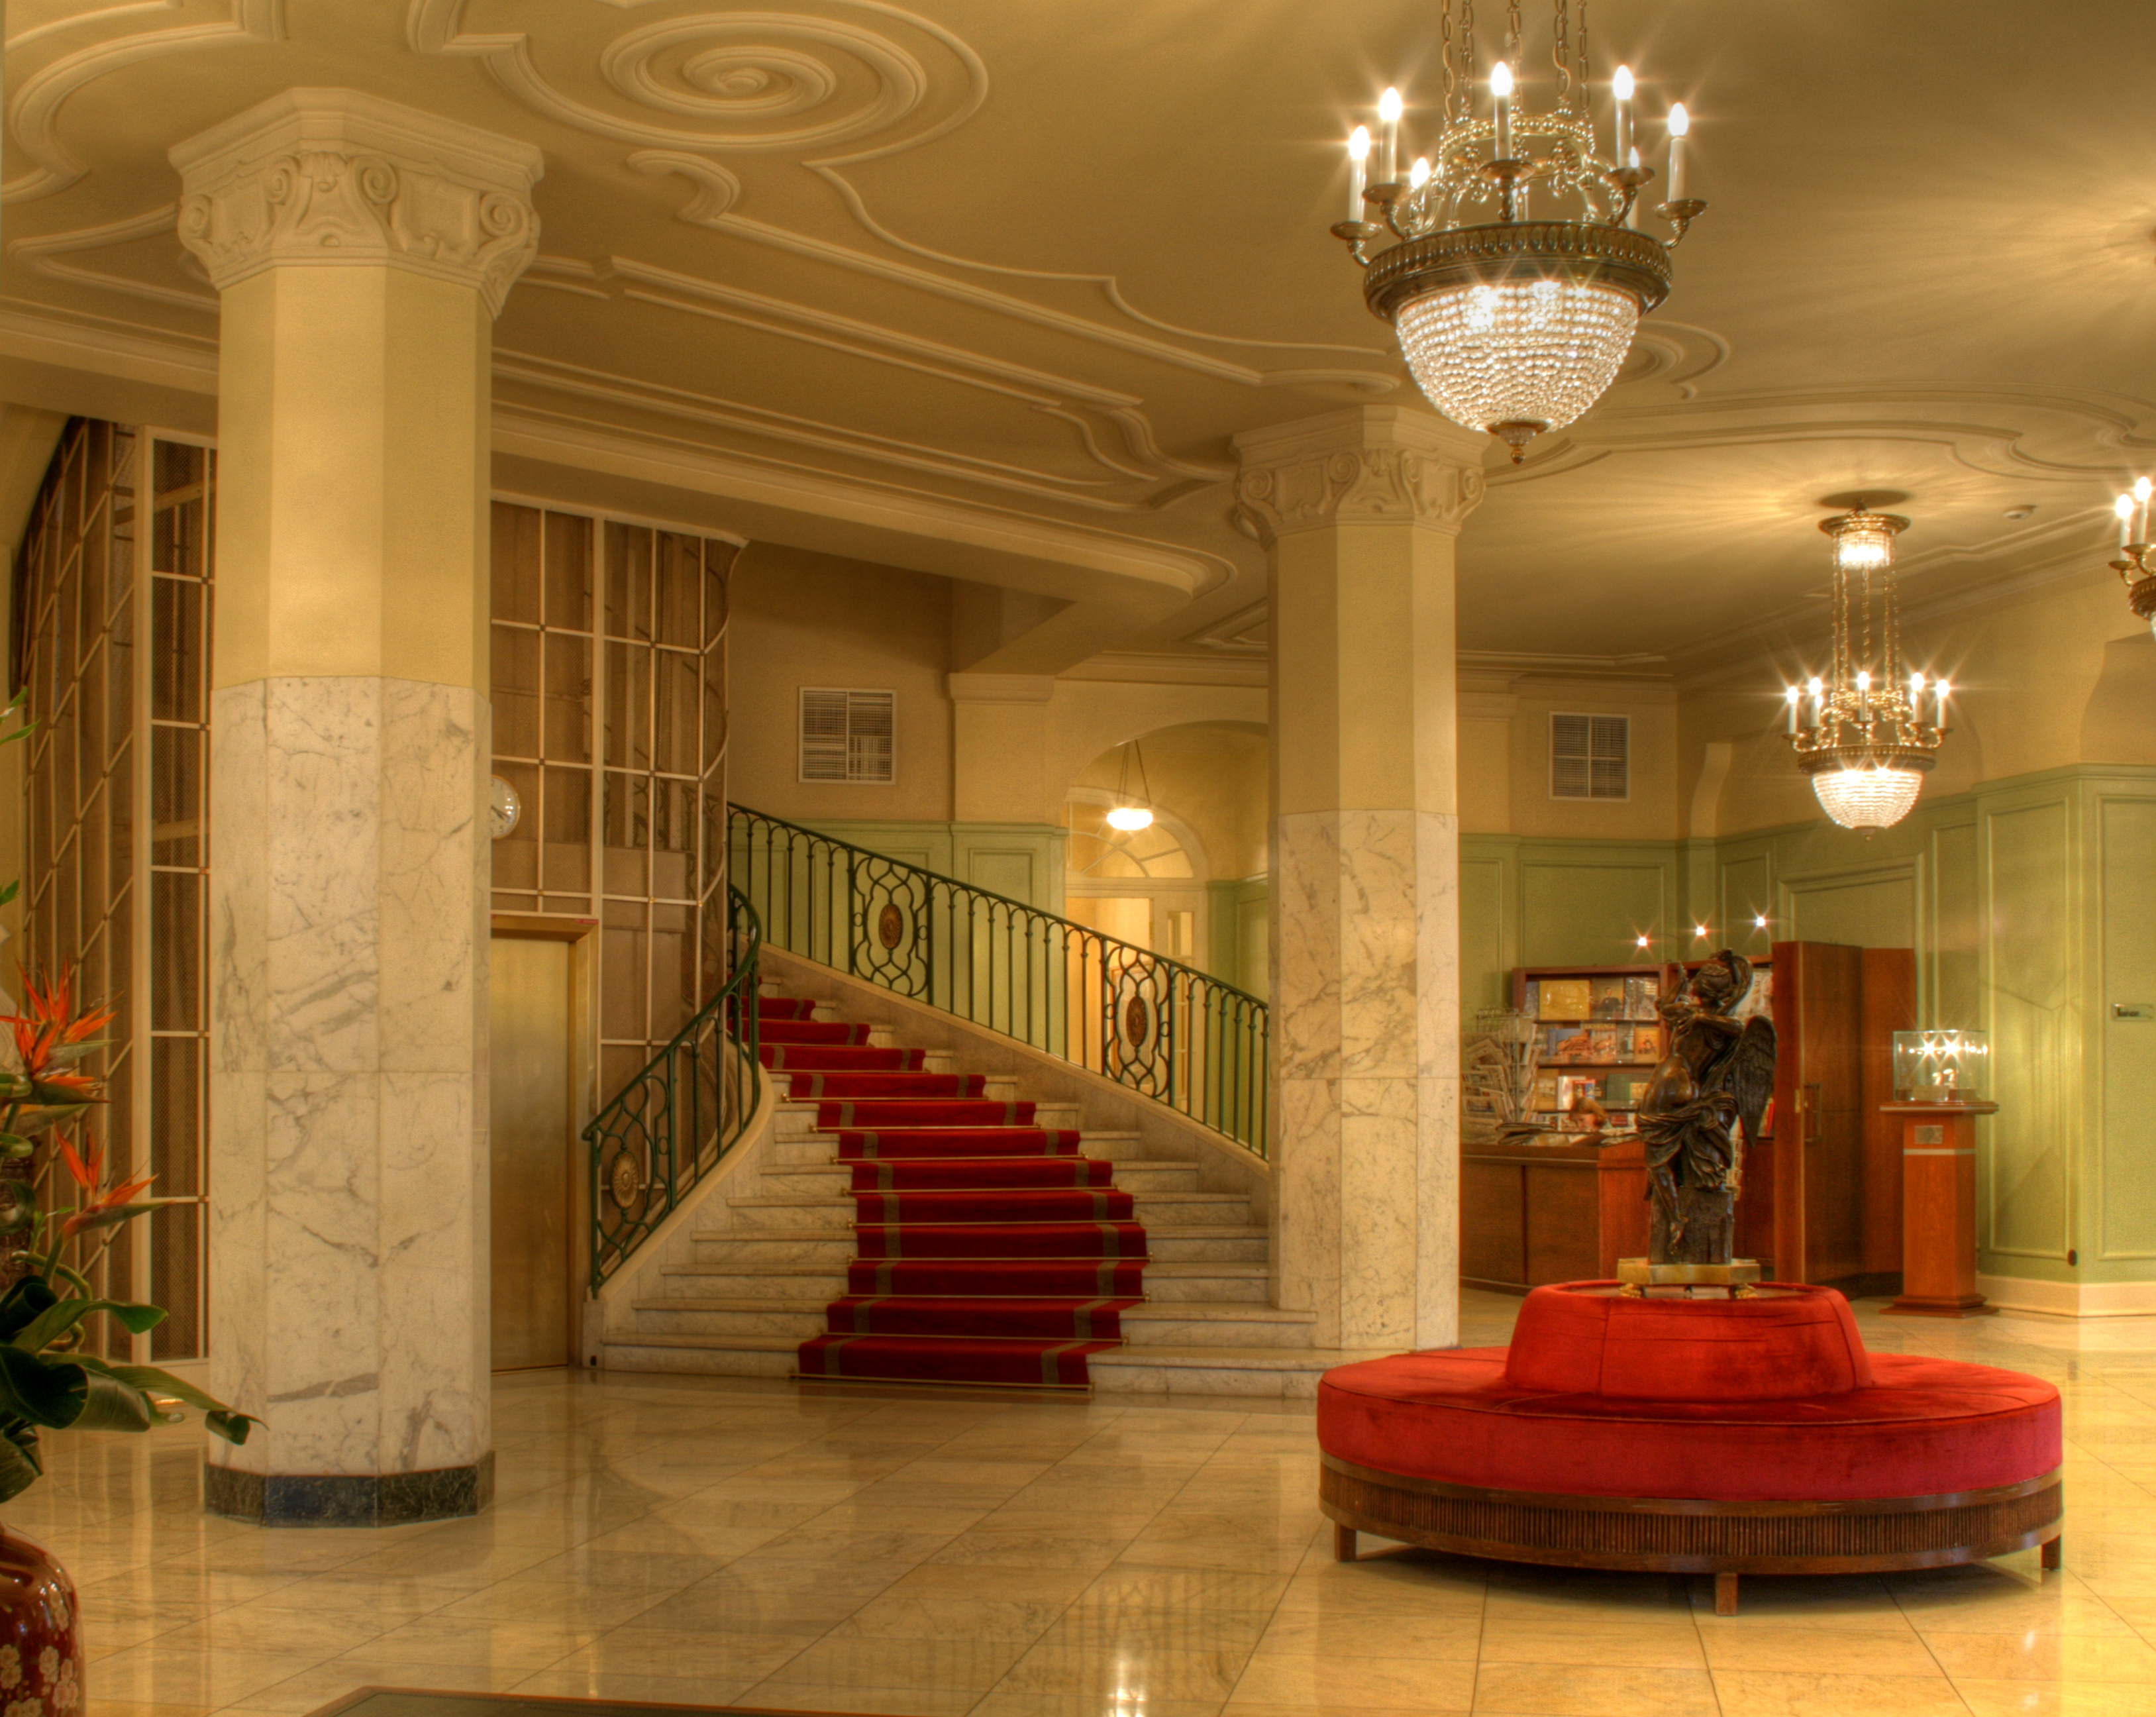 отель астория петербург